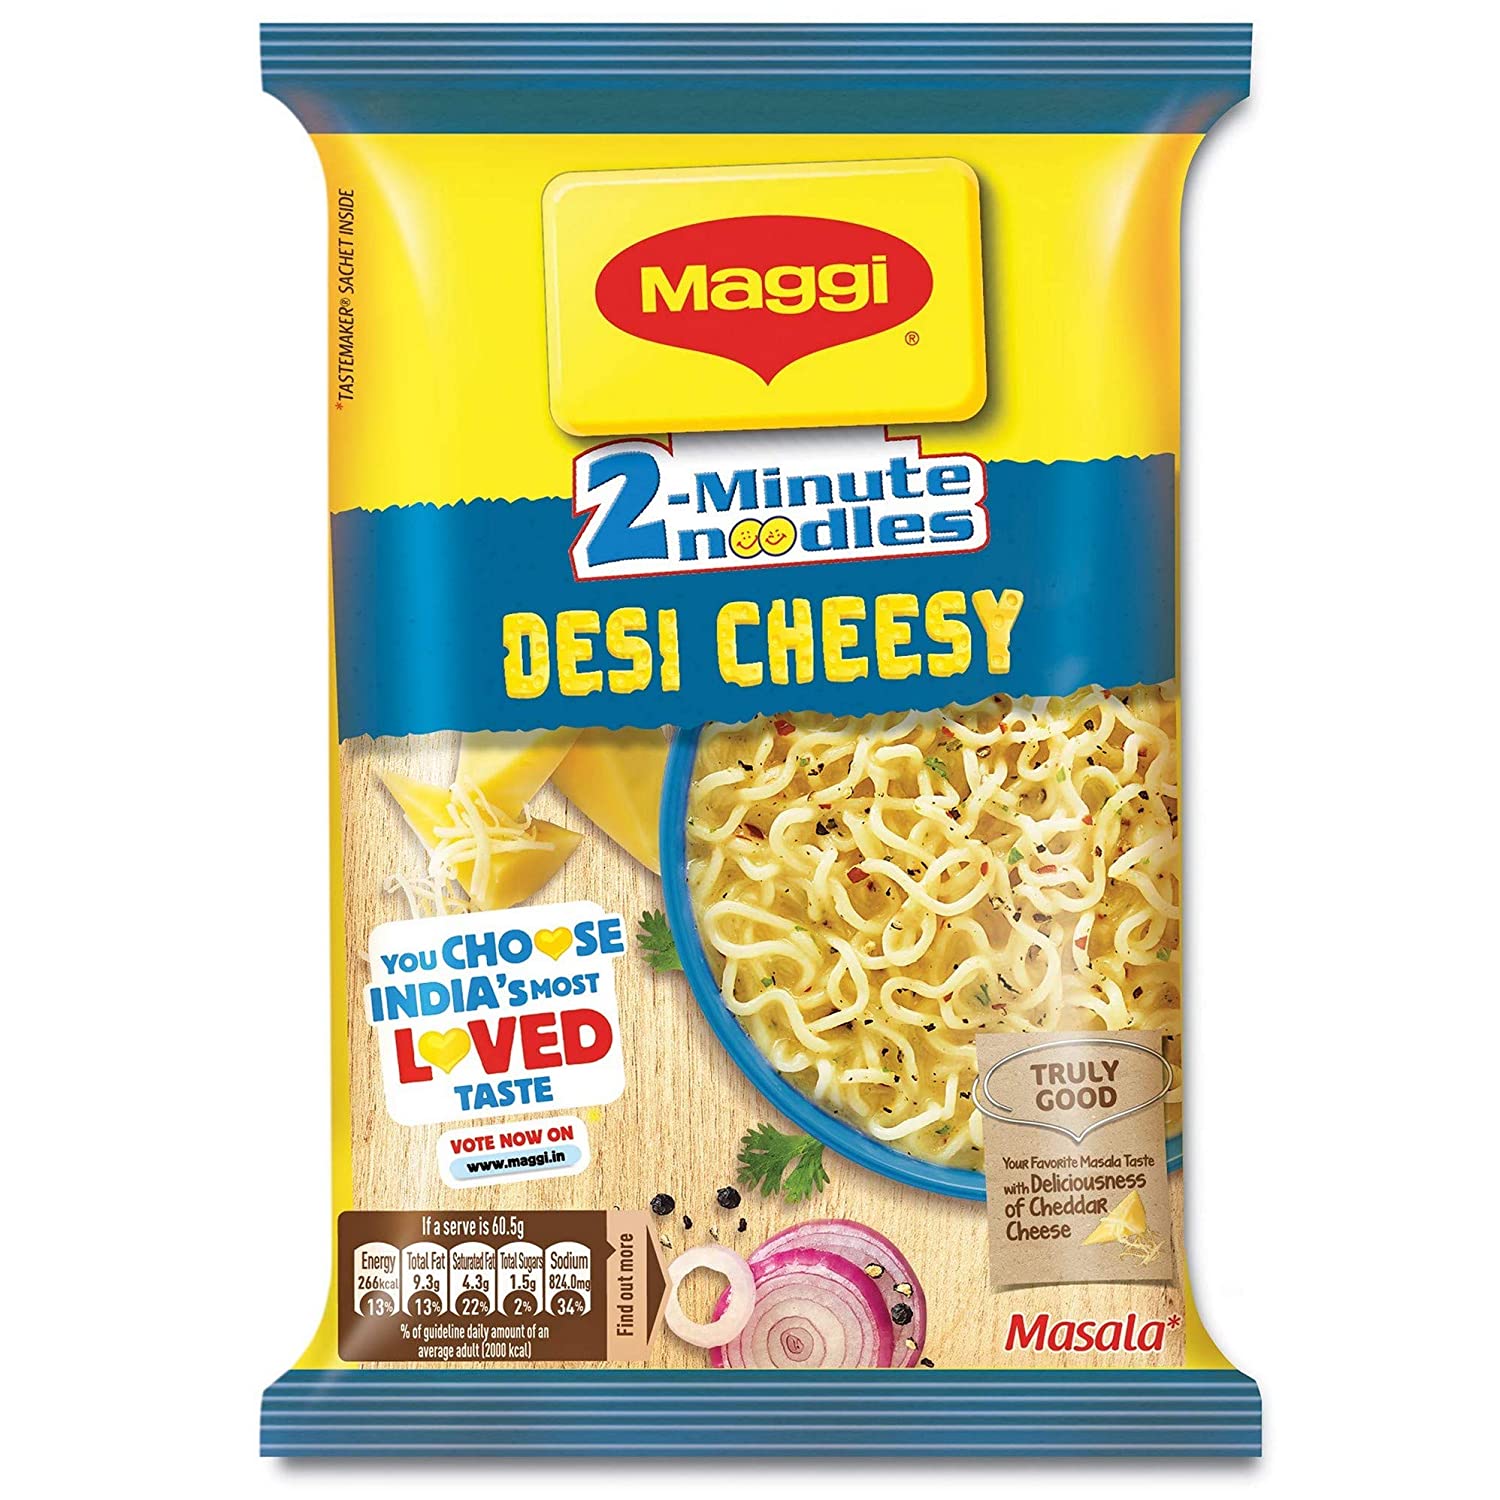 MAGGI 2-Minute Instant Noodles, Desi Cheesy 